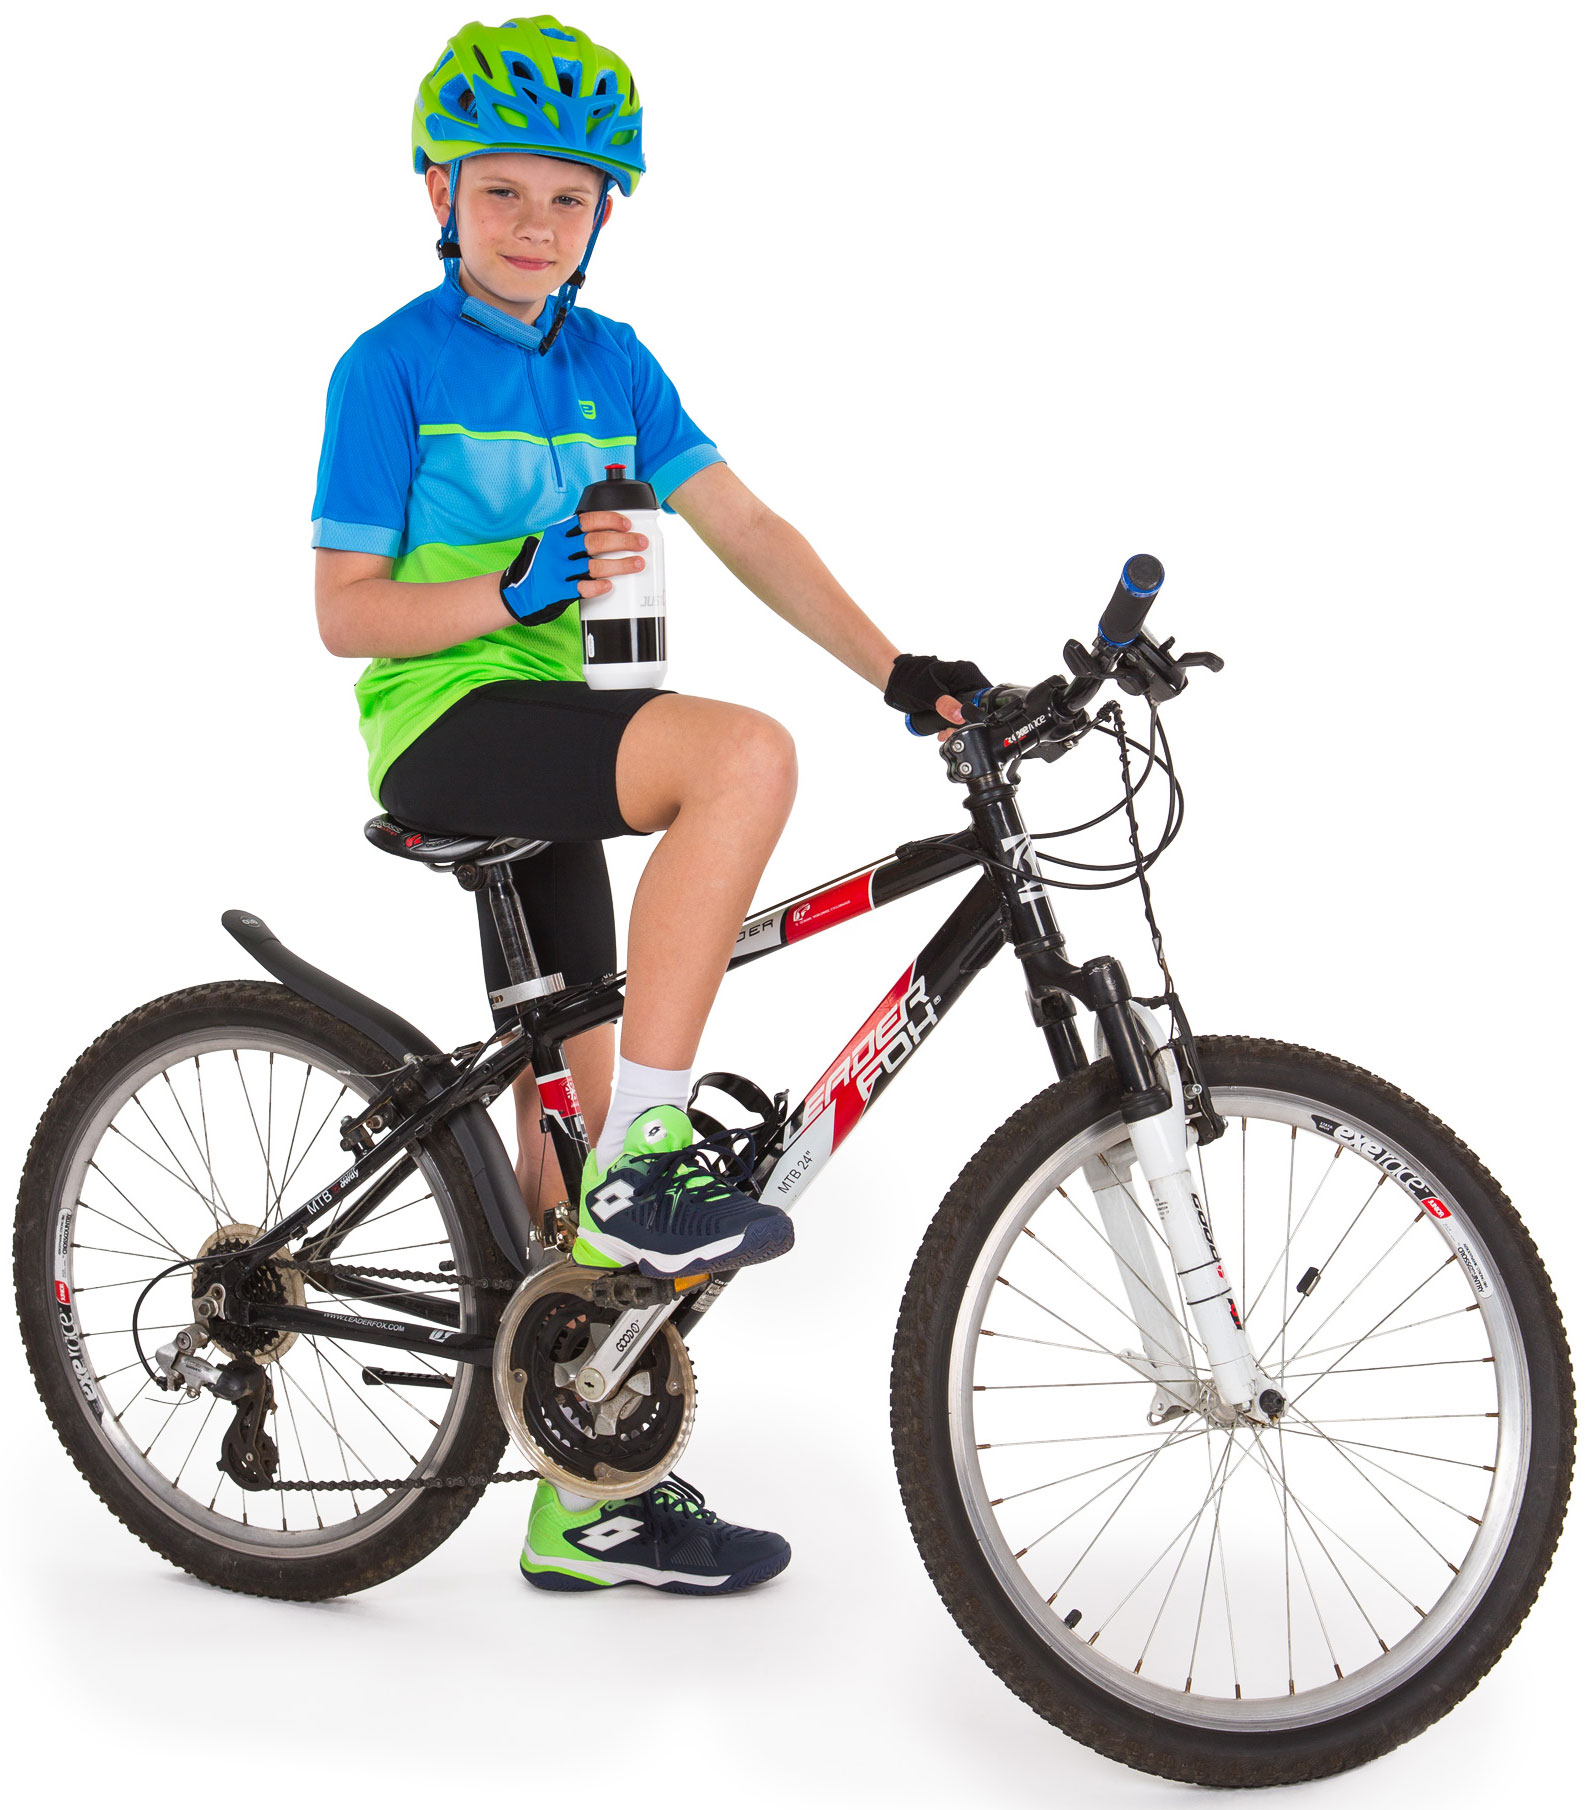 PICCOLO - Children's cycling shorts